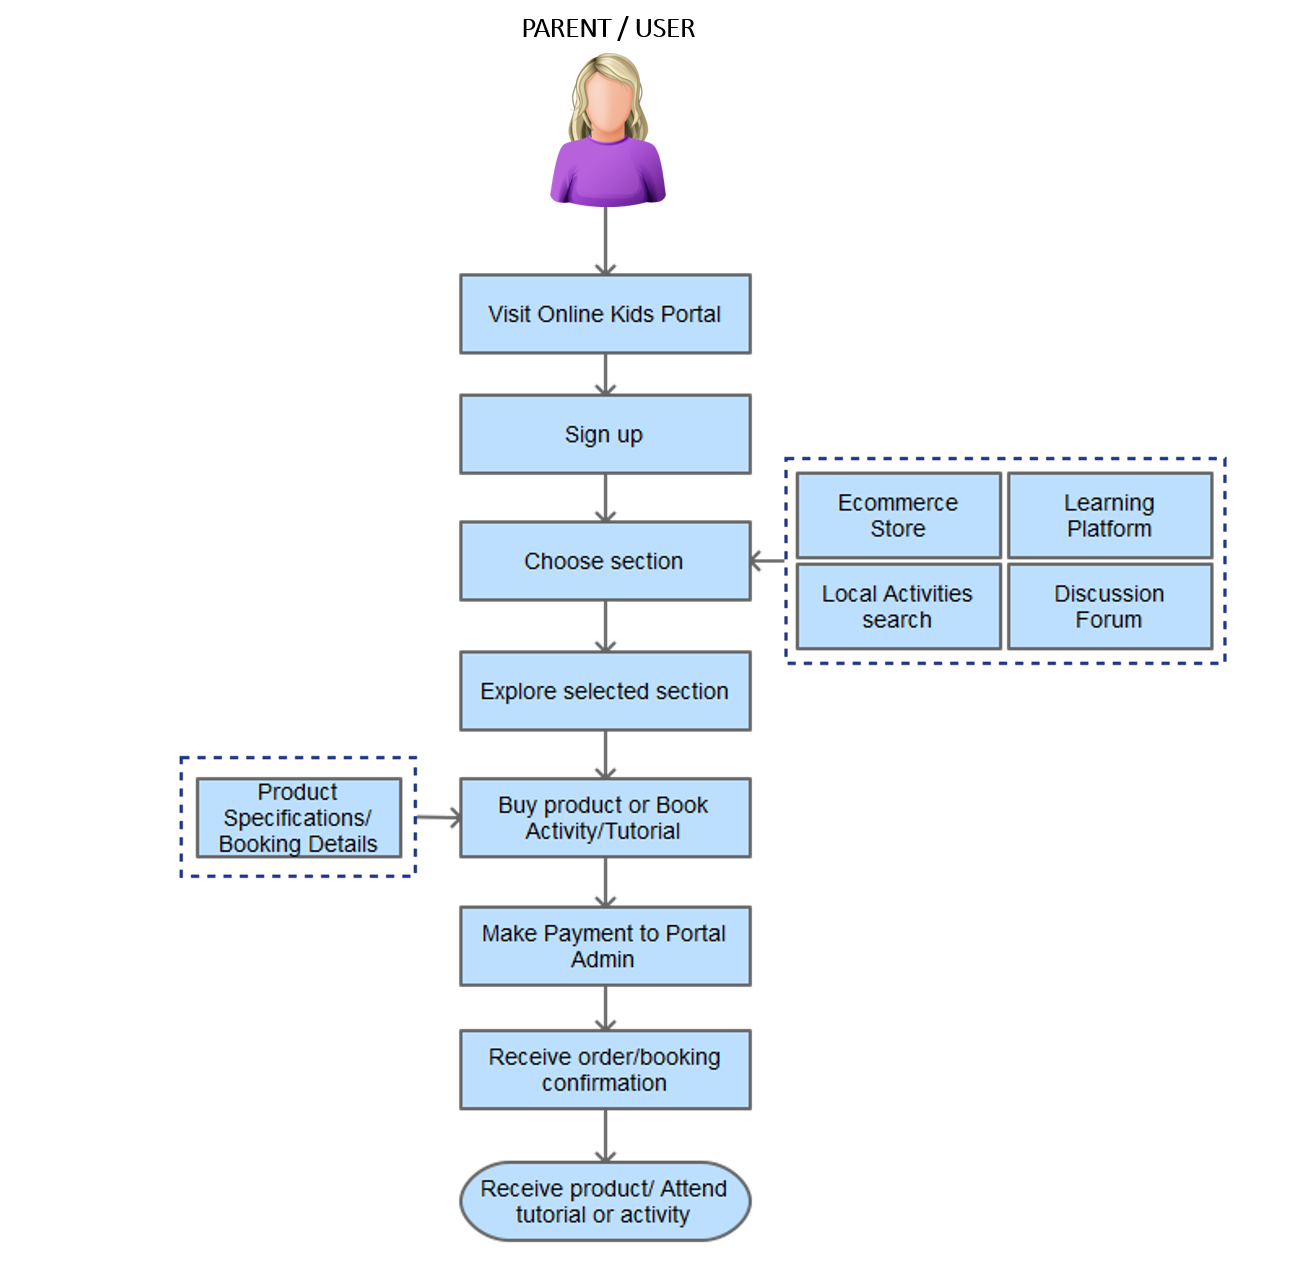 Process Flow diagram for user on Online Kids Portal